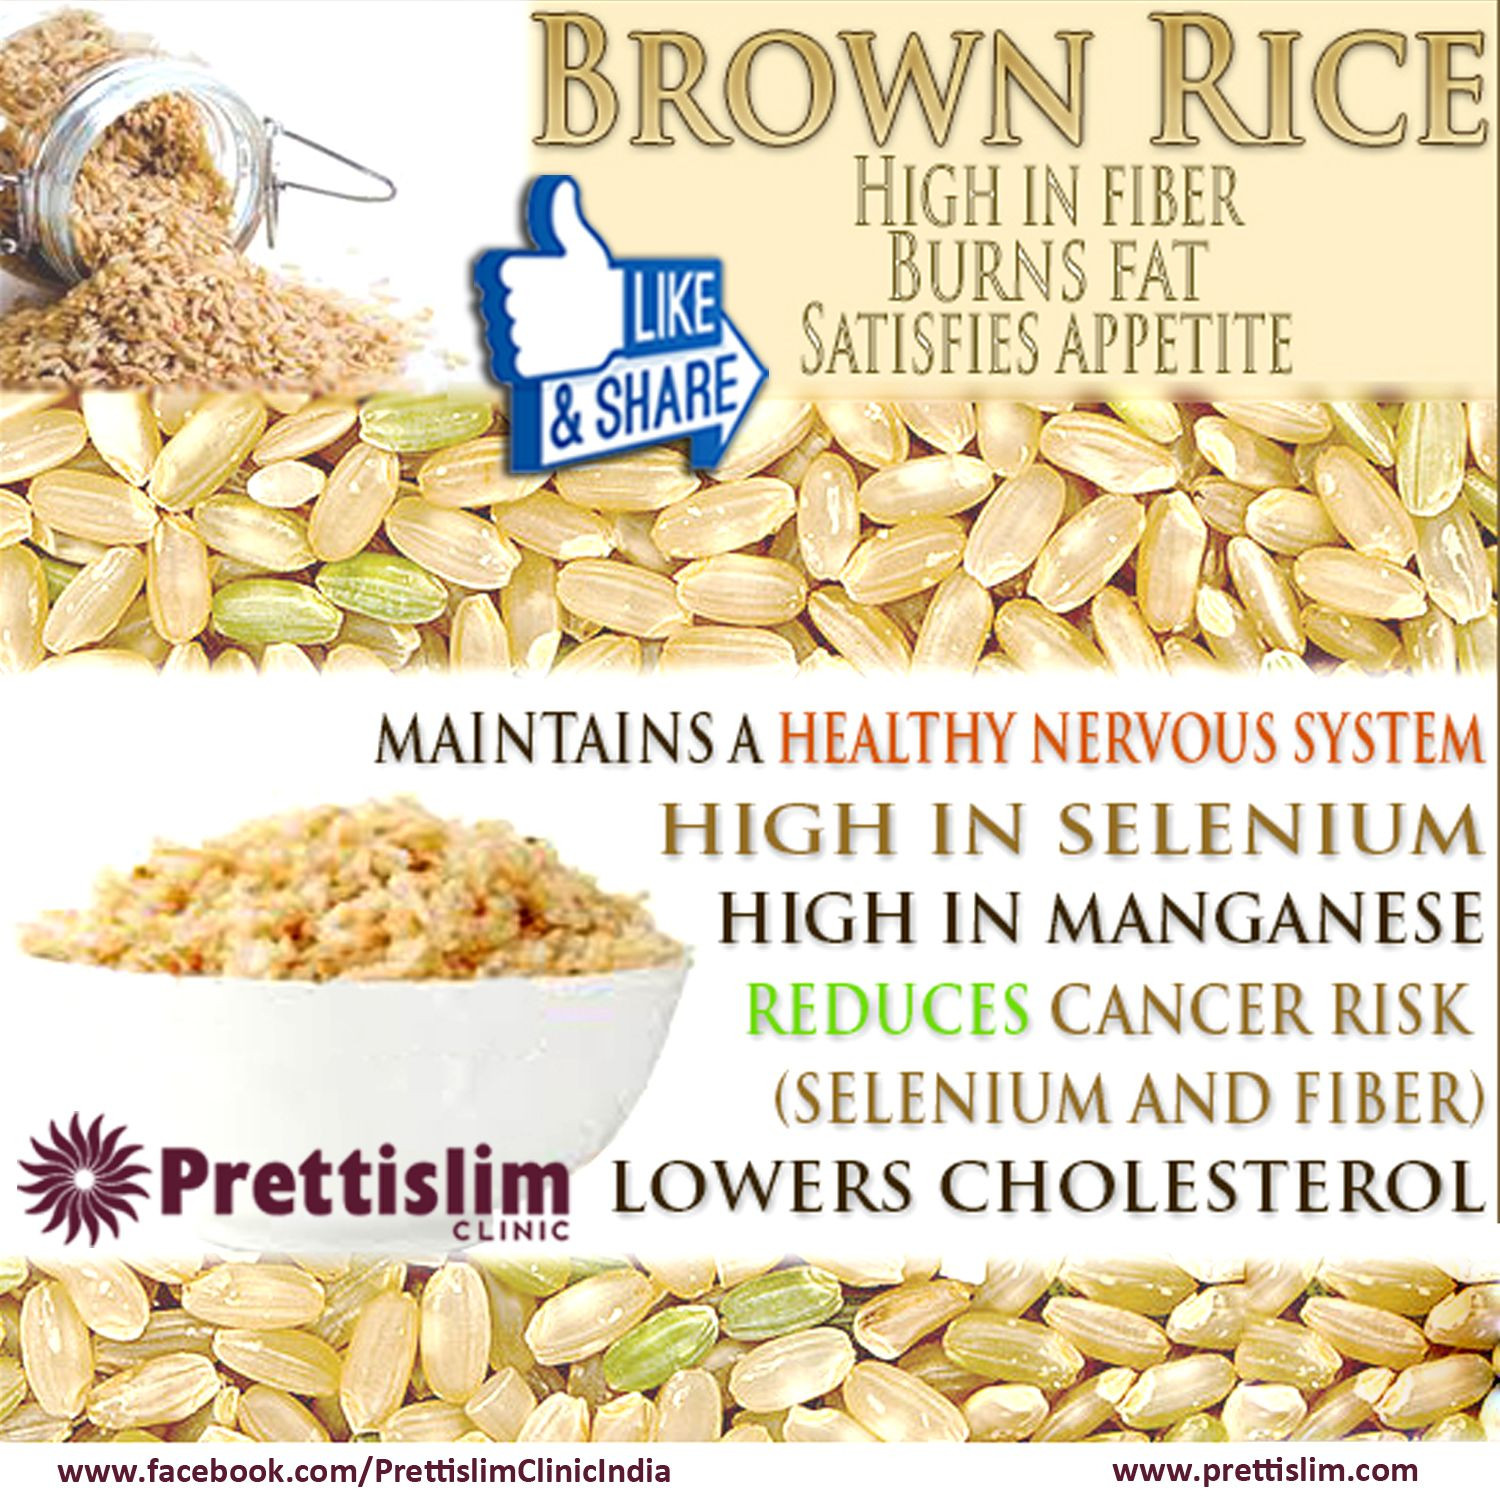 Is Brown Rice High In Fiber
 Brownrice High in Fiber BurnsFat Satisfies Appetite